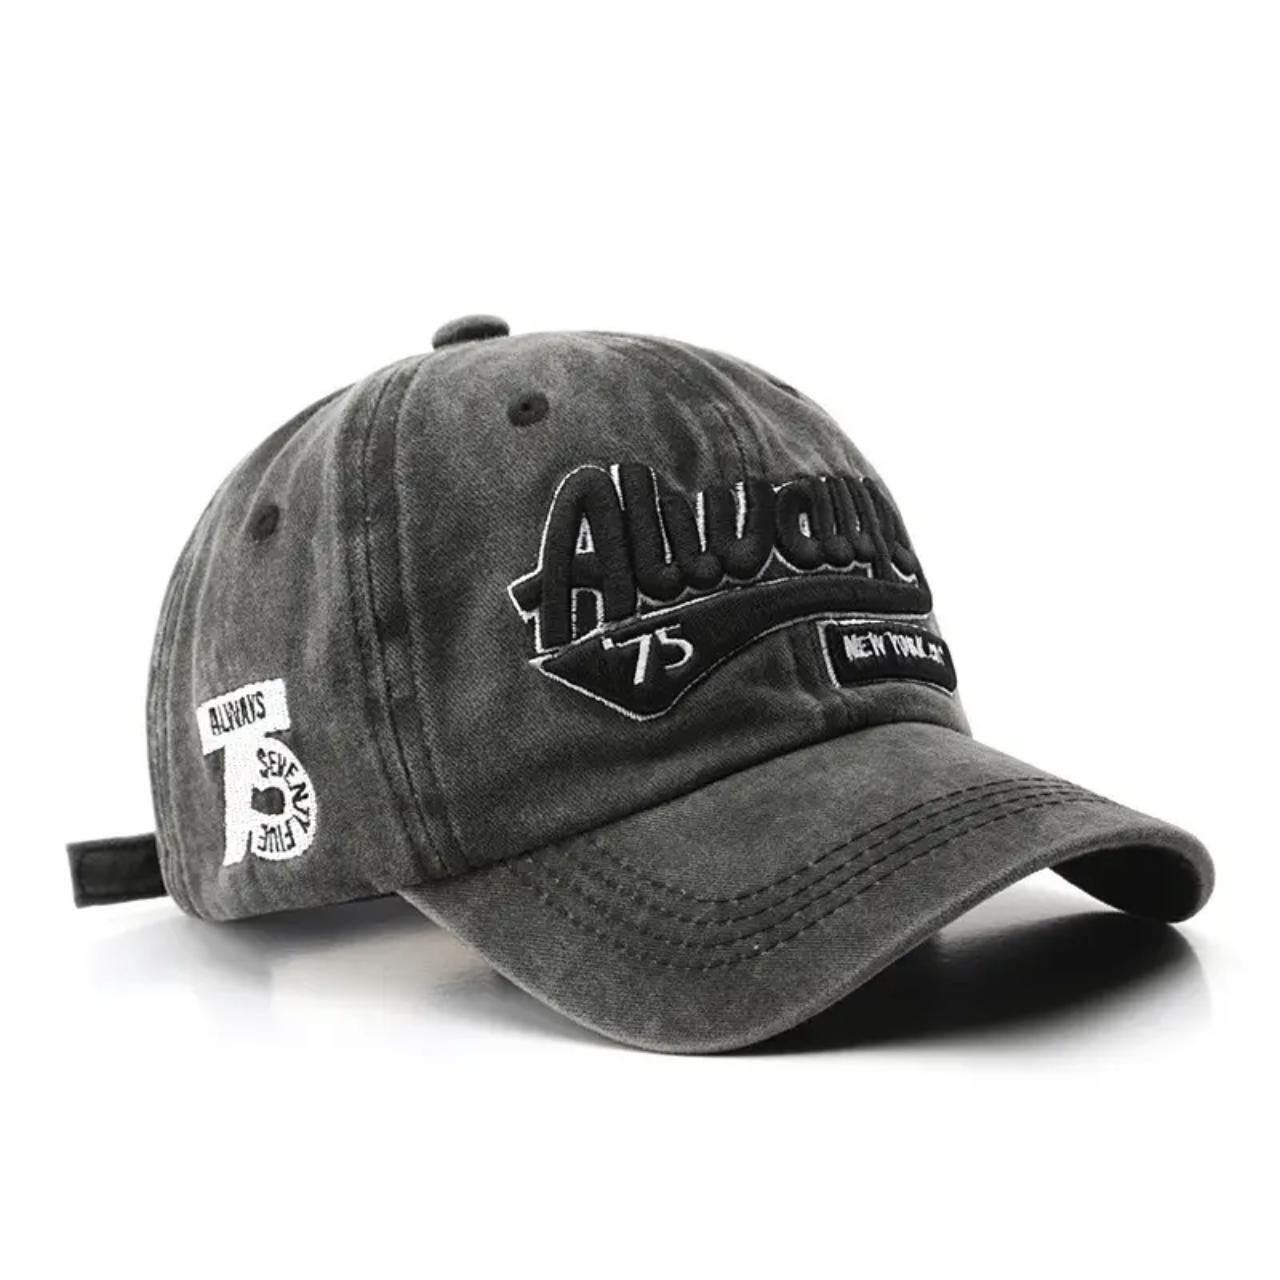 Always '75 New York City baseball cap / hat brand... - Depop